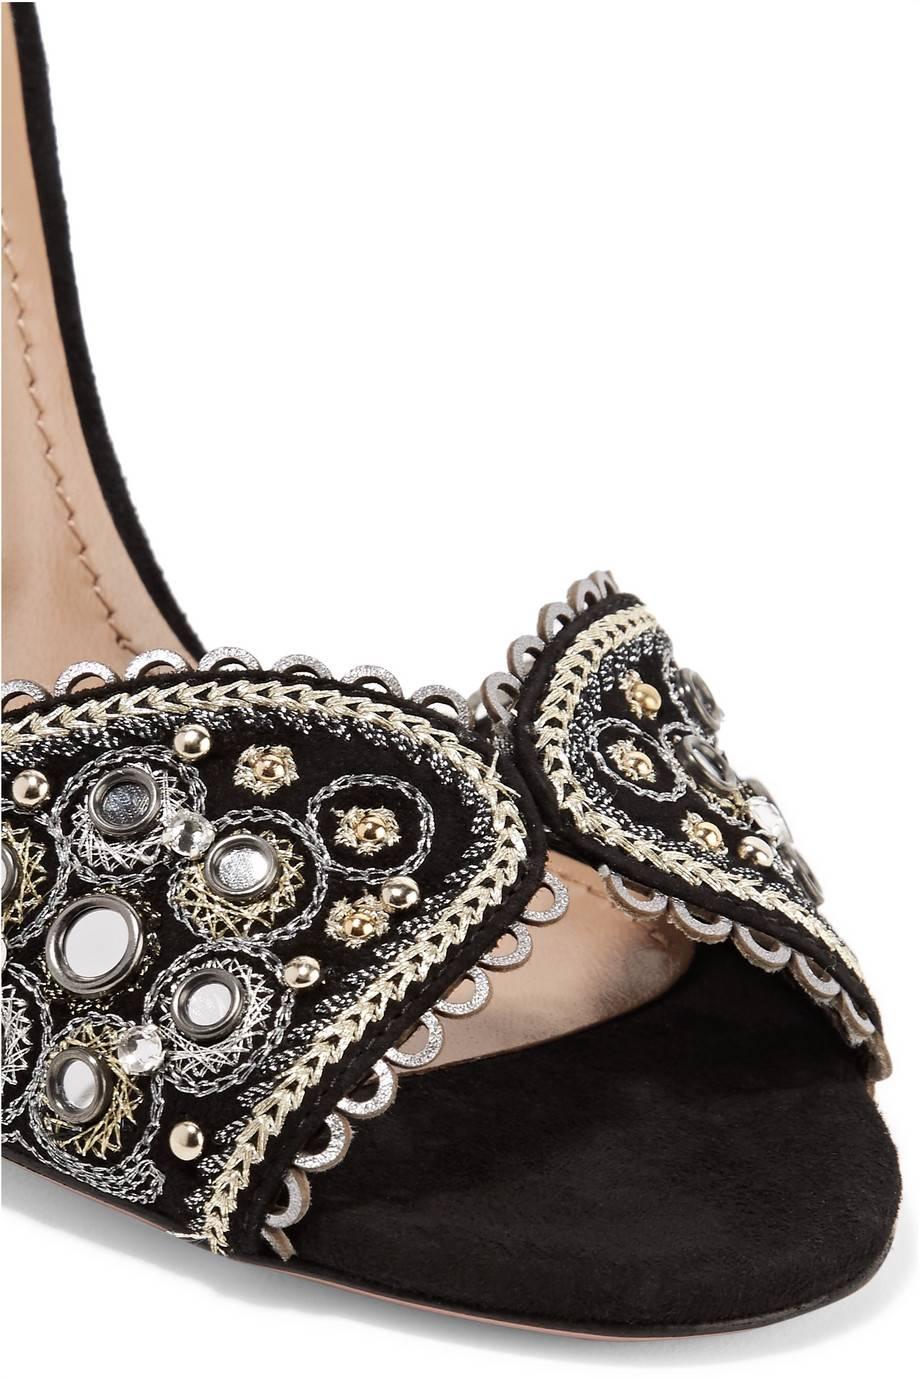 Women's Aquazzura Black Gold Silver Suede Embroidered Evening Sandals Heels  